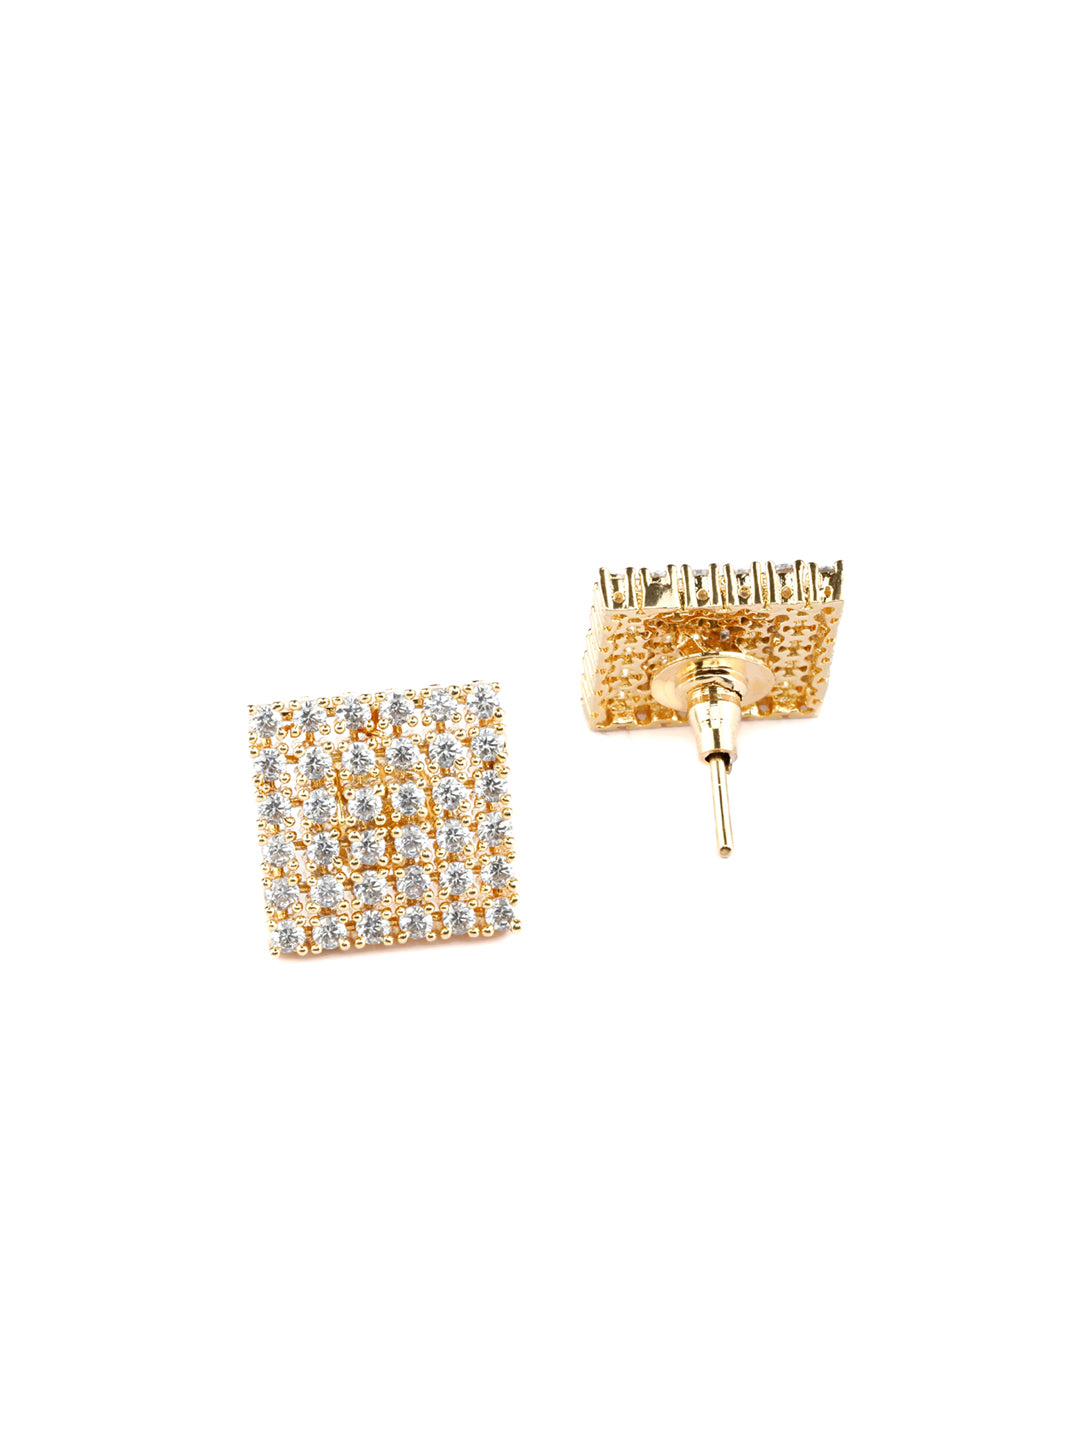 Gold Plated American Diamond Geometric Pendant & Earring Set